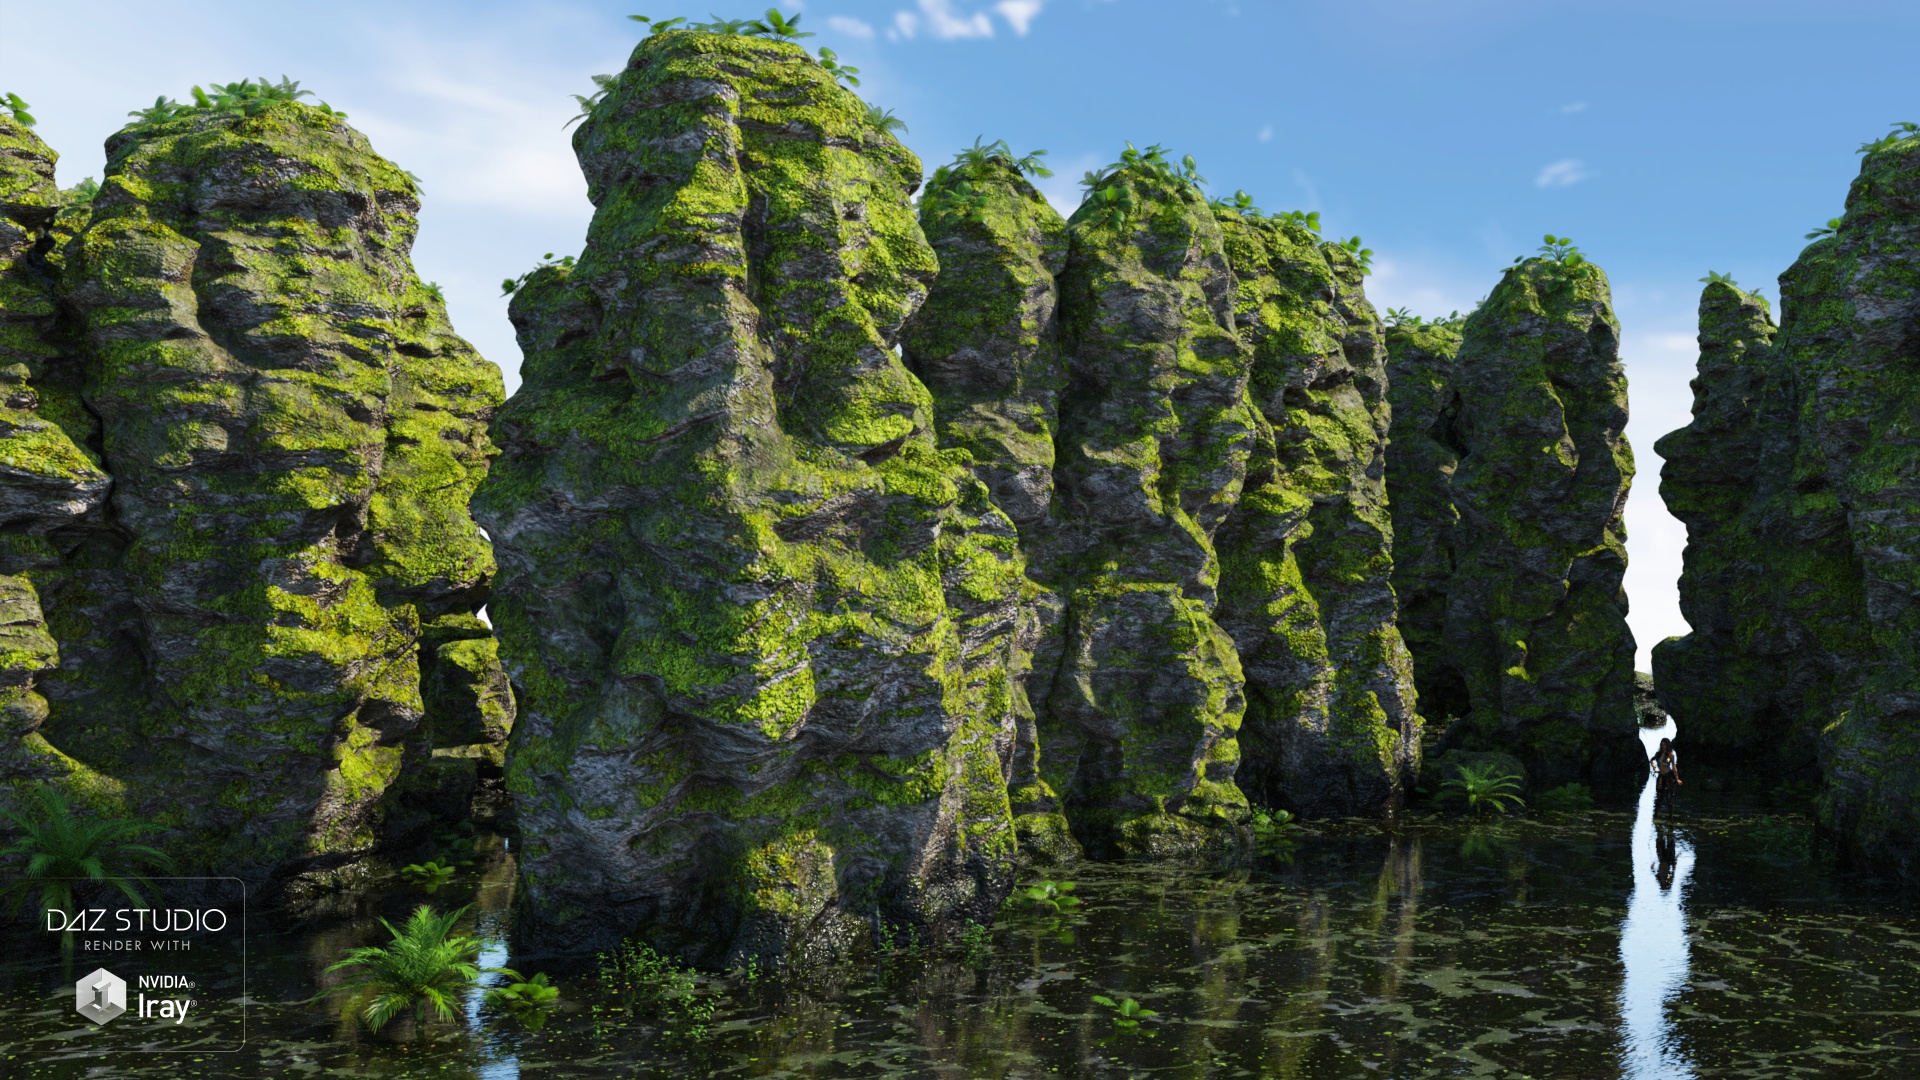 Nature Ravine by: Andrey Pestryakov, 3D Models by Daz 3D